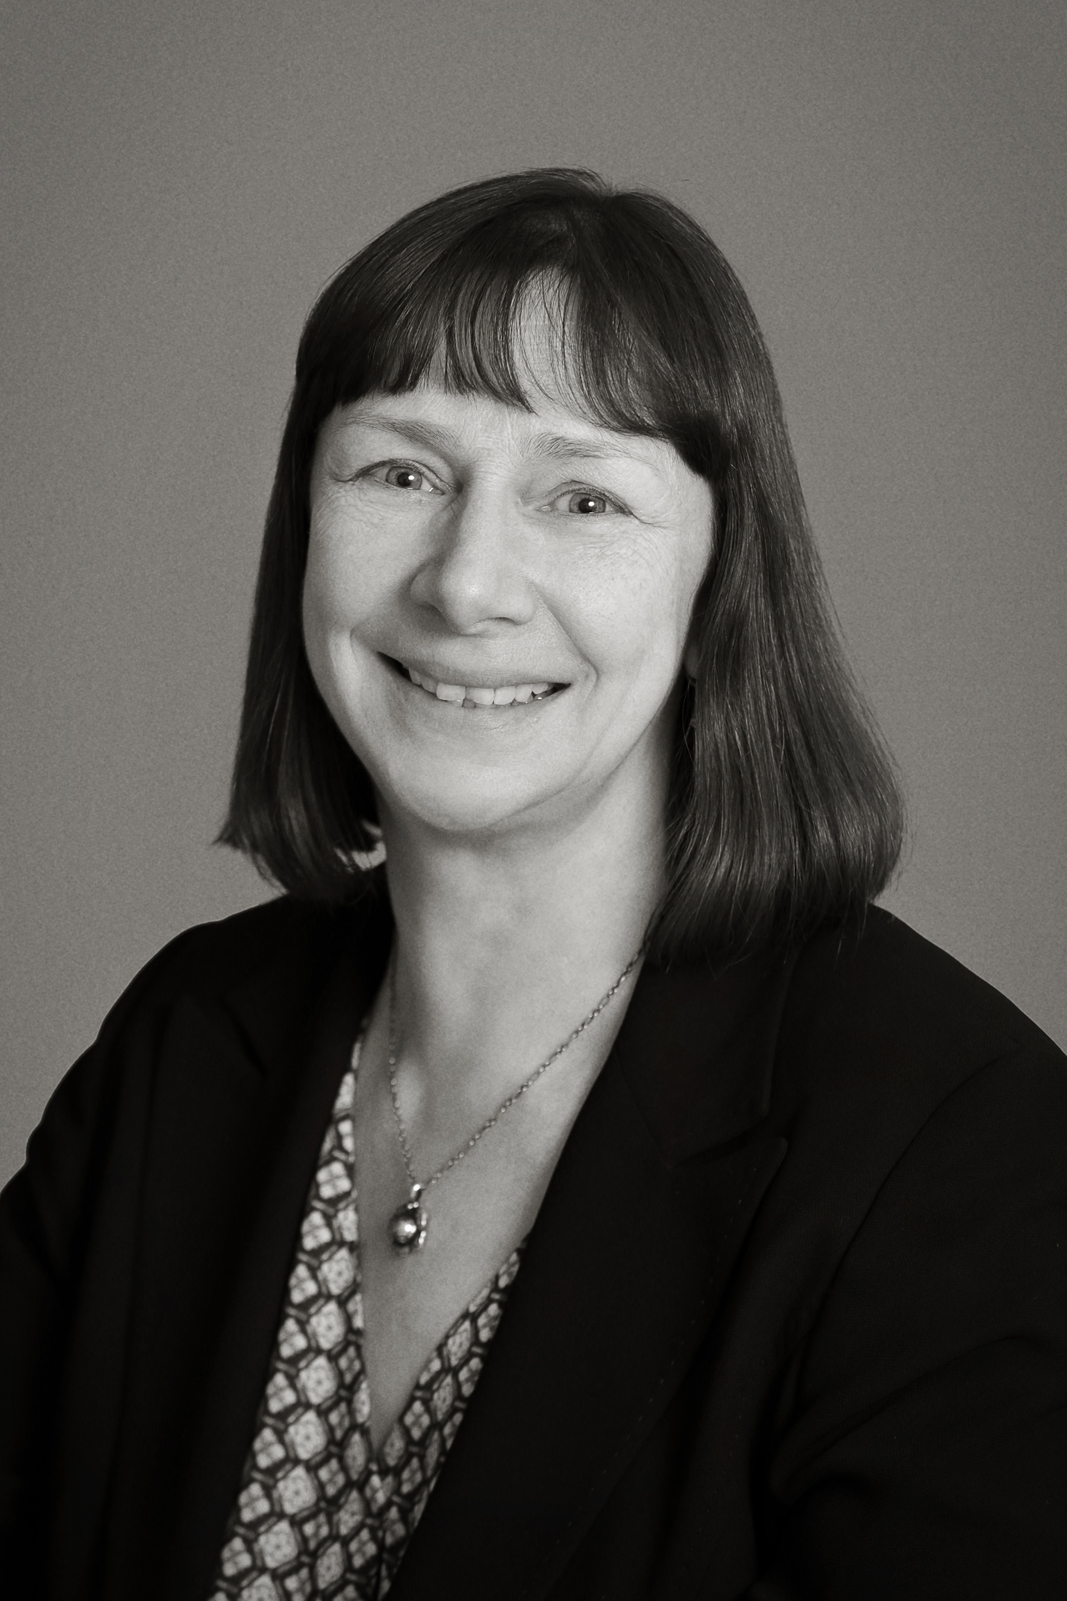 Alison Gordon - Senior Associate at Warners